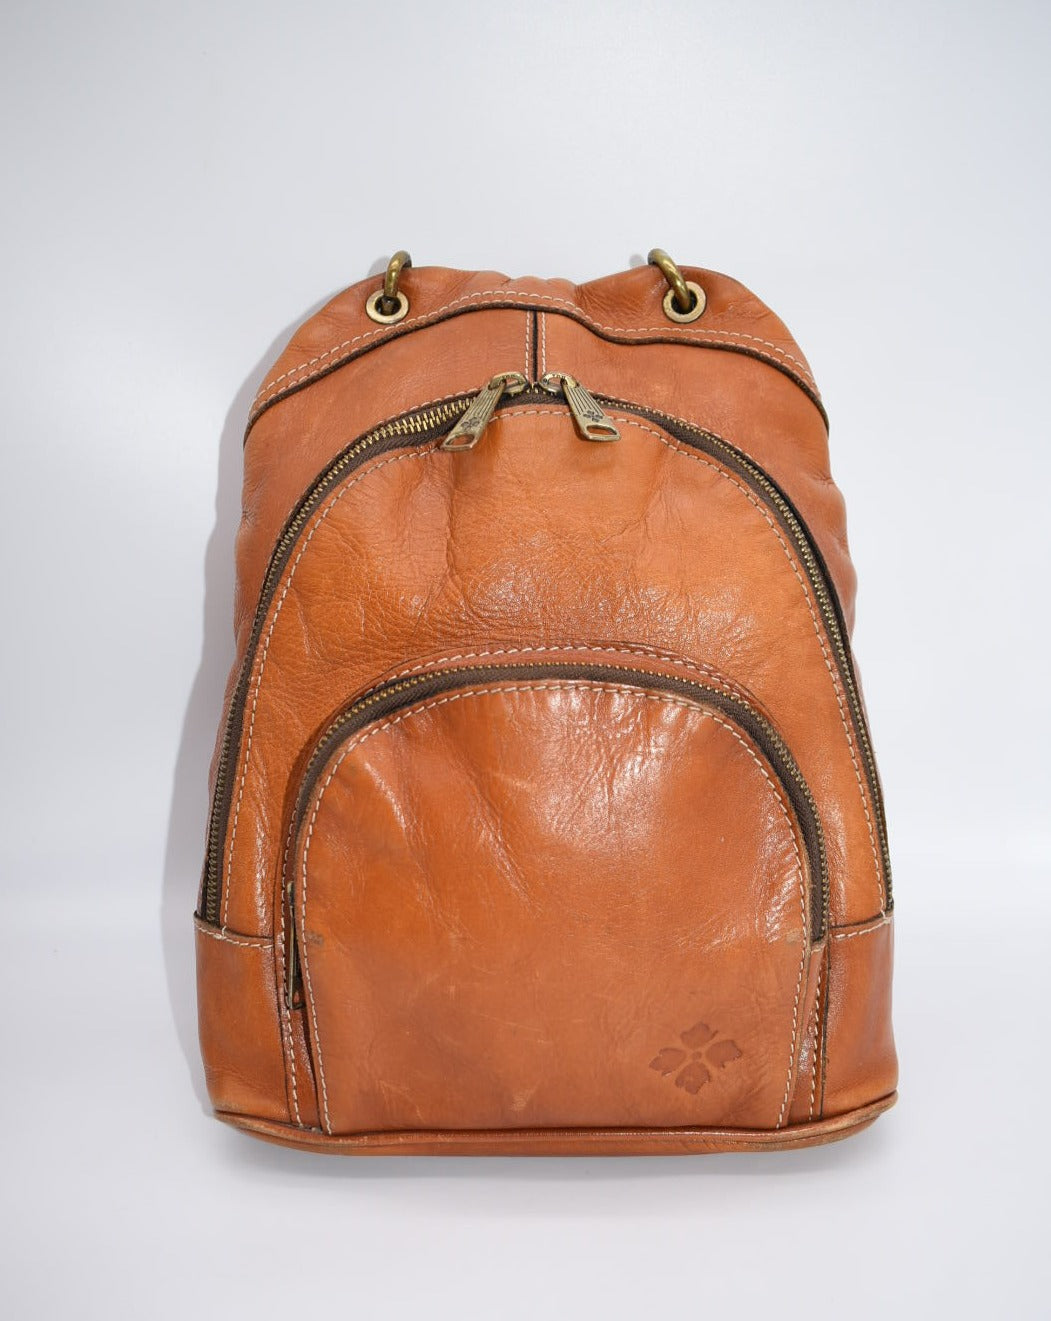 Patricia Nash Alencon Small Backpack in Heritage Tan